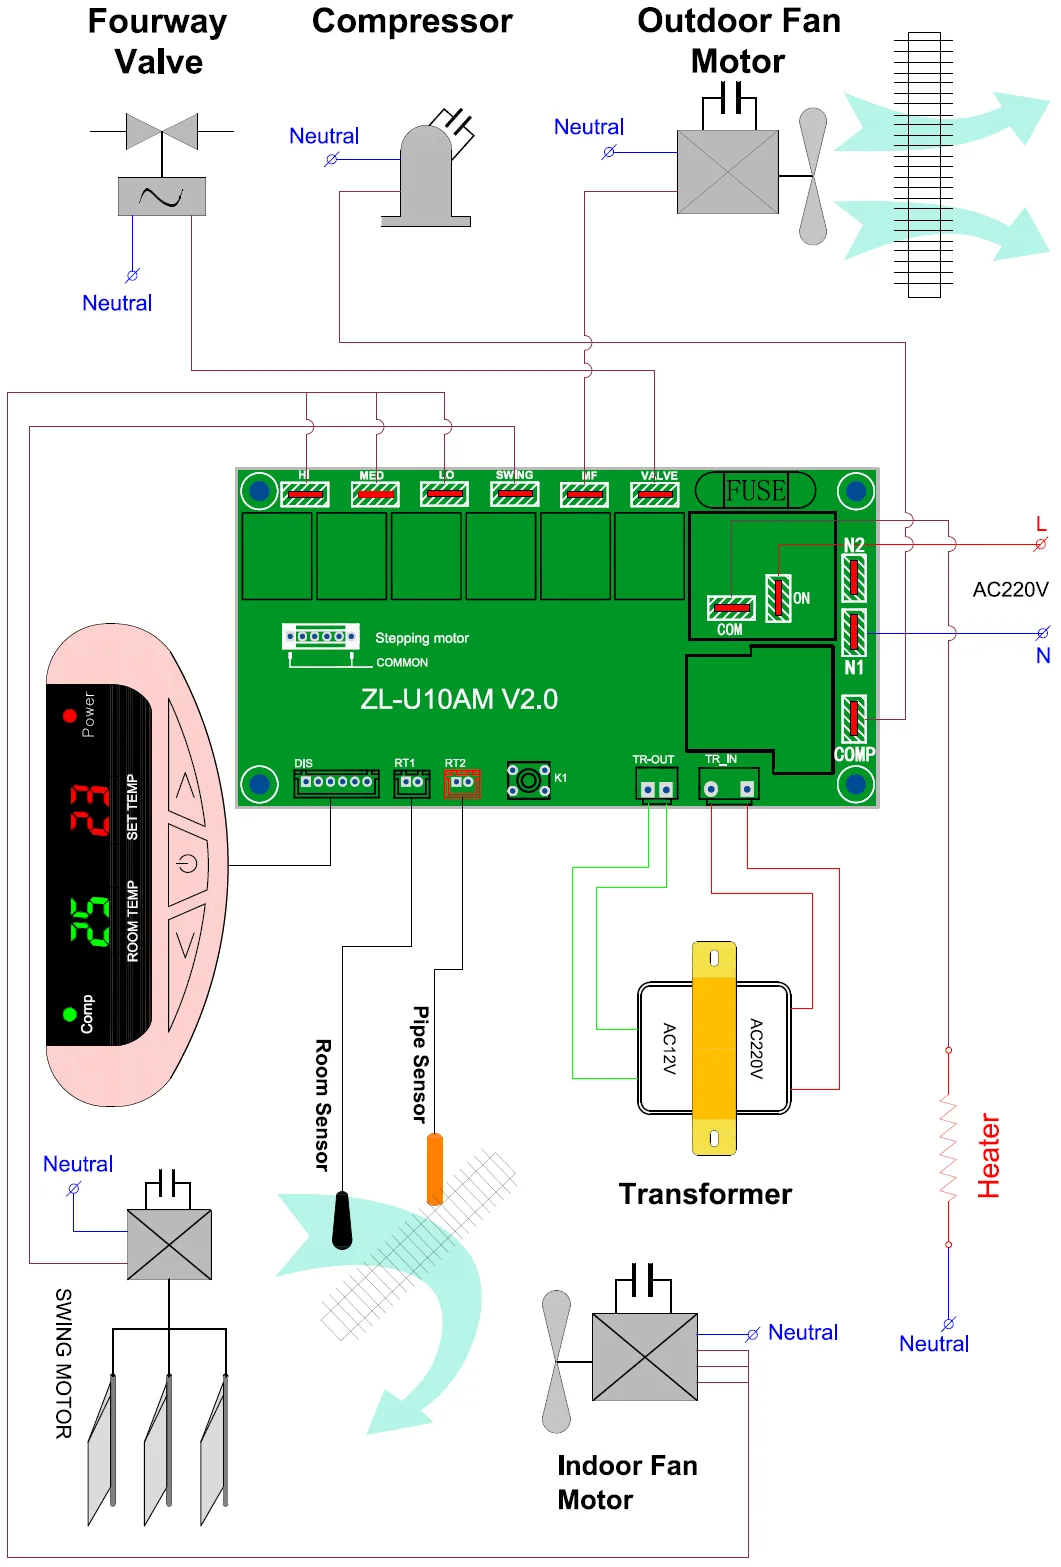 Zl-u10am,Auto Restart A/c Controller For Cabinet Air Conditioner,Ac